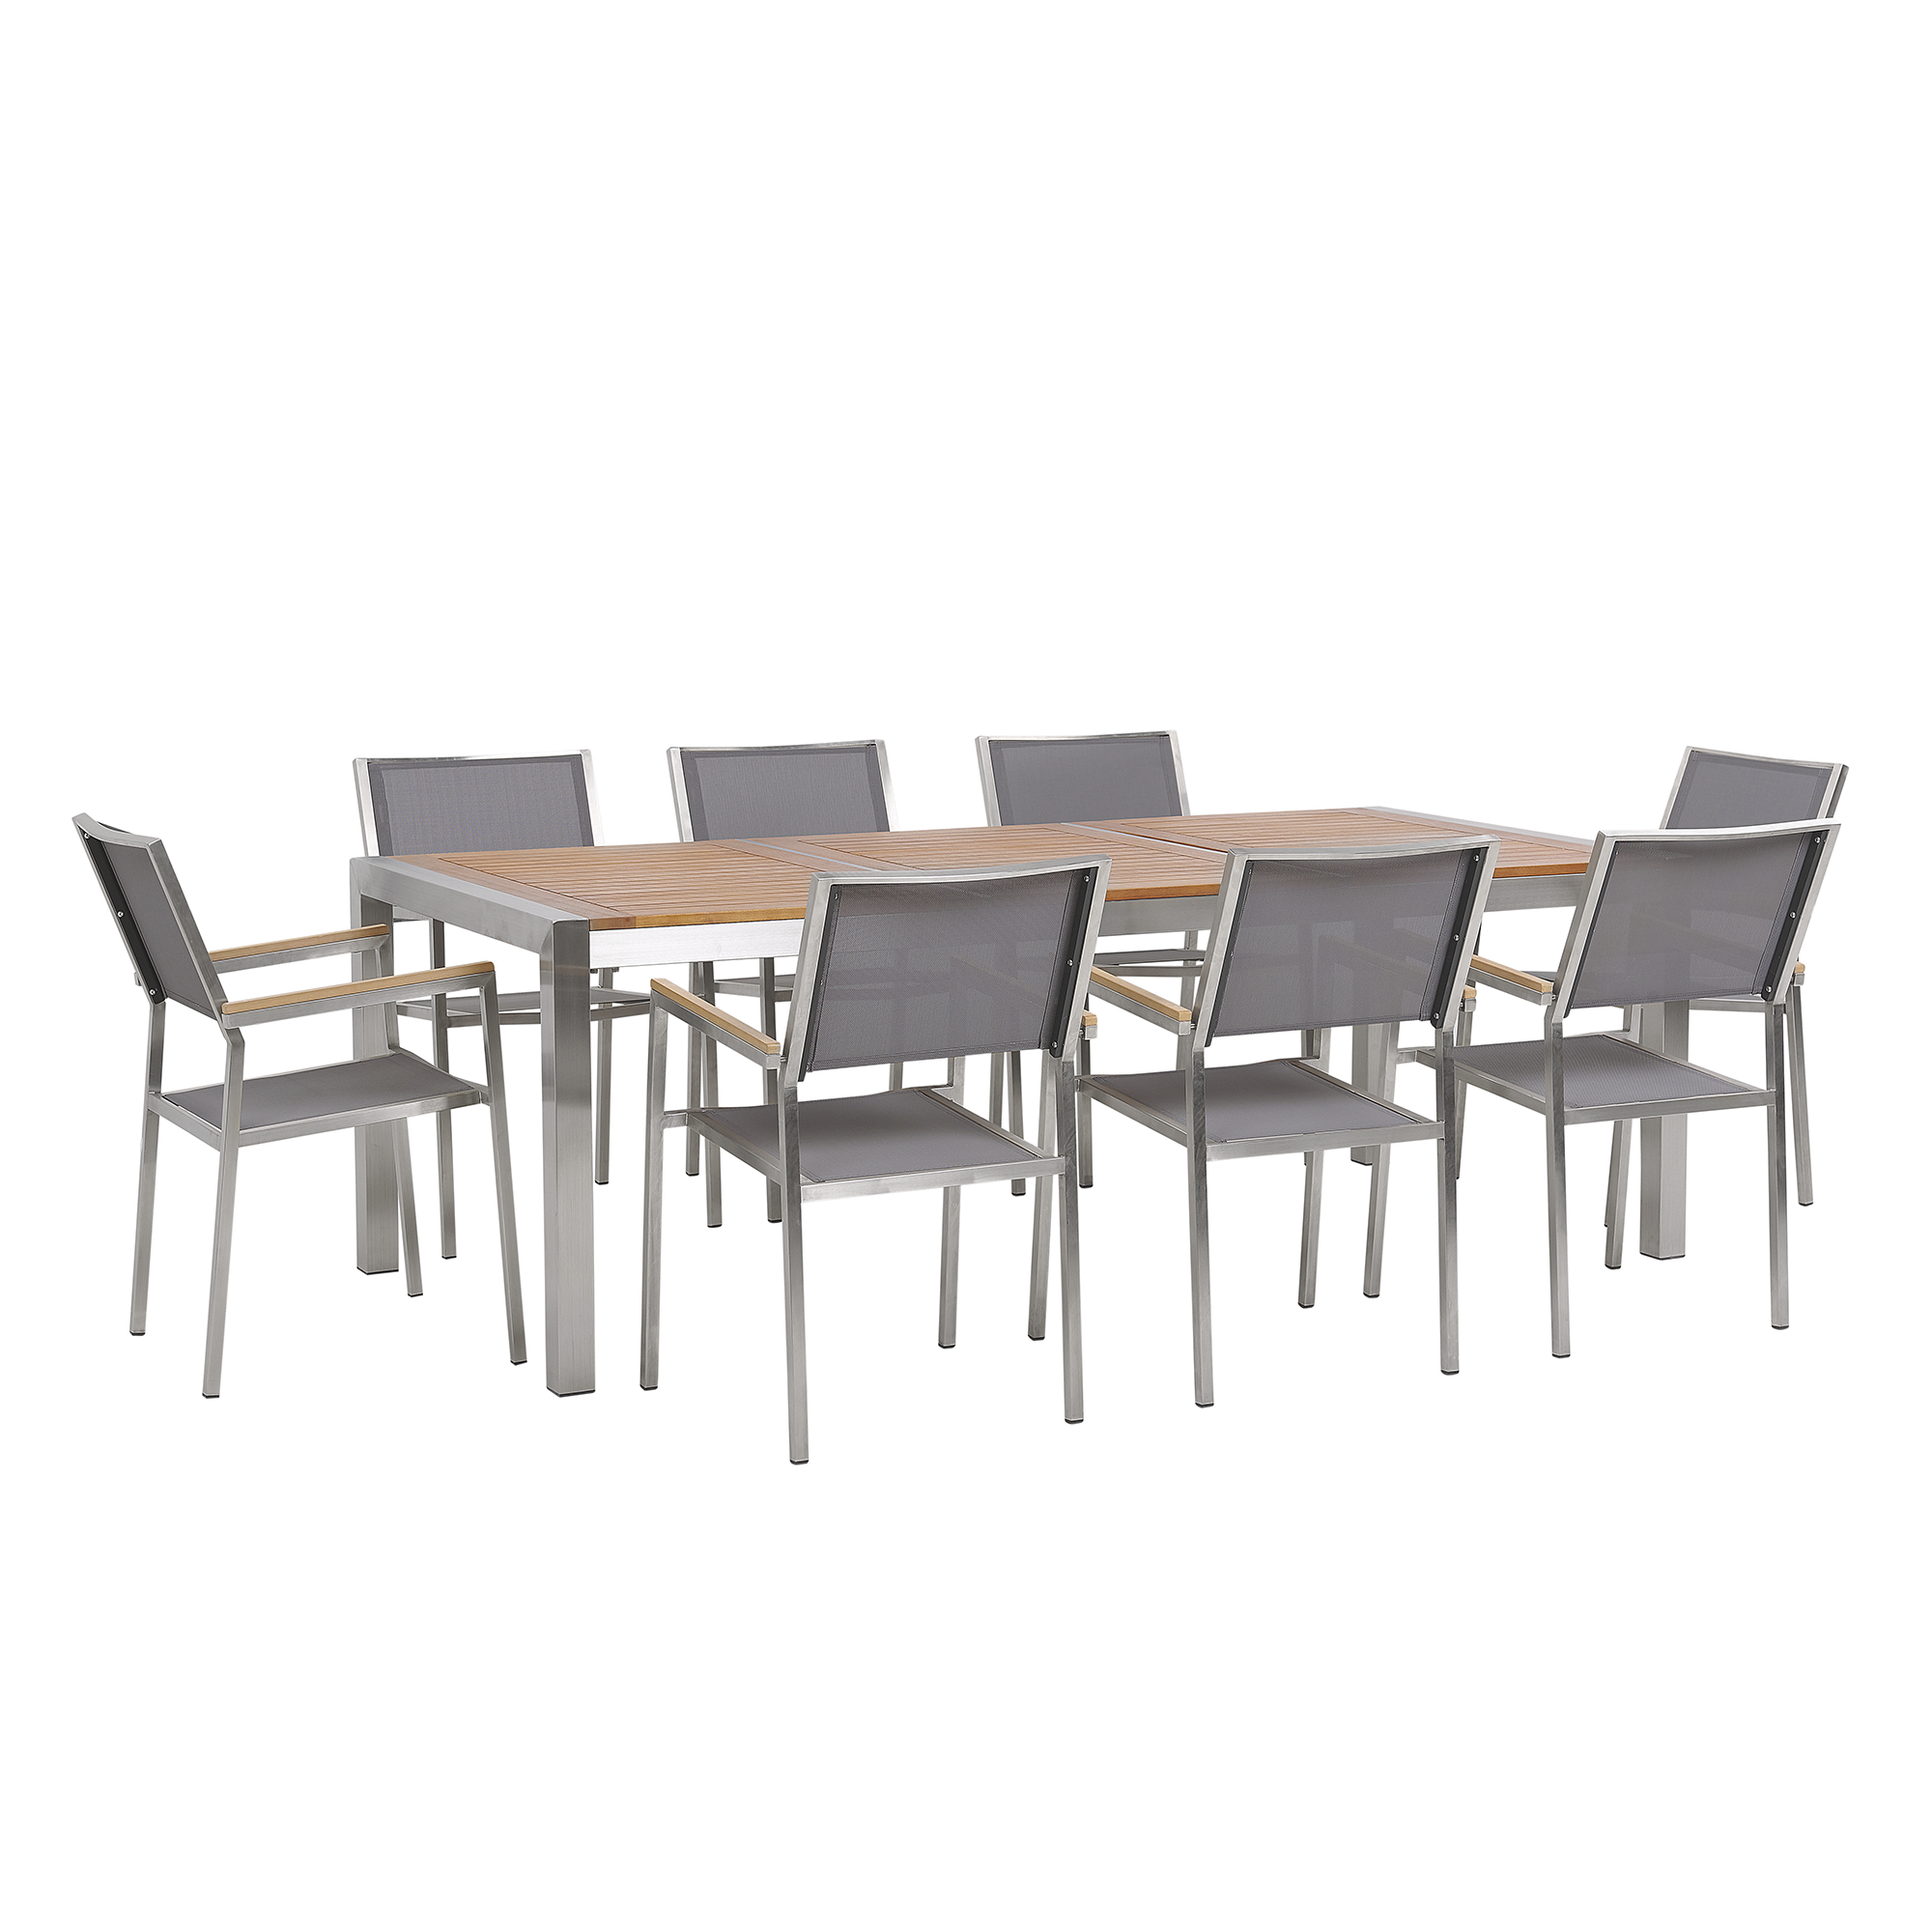 Beliani Garden Dining Set Light Eucalyptus Wood Top Steel Frame 220 x 100 cm with 8 Grey Chairs